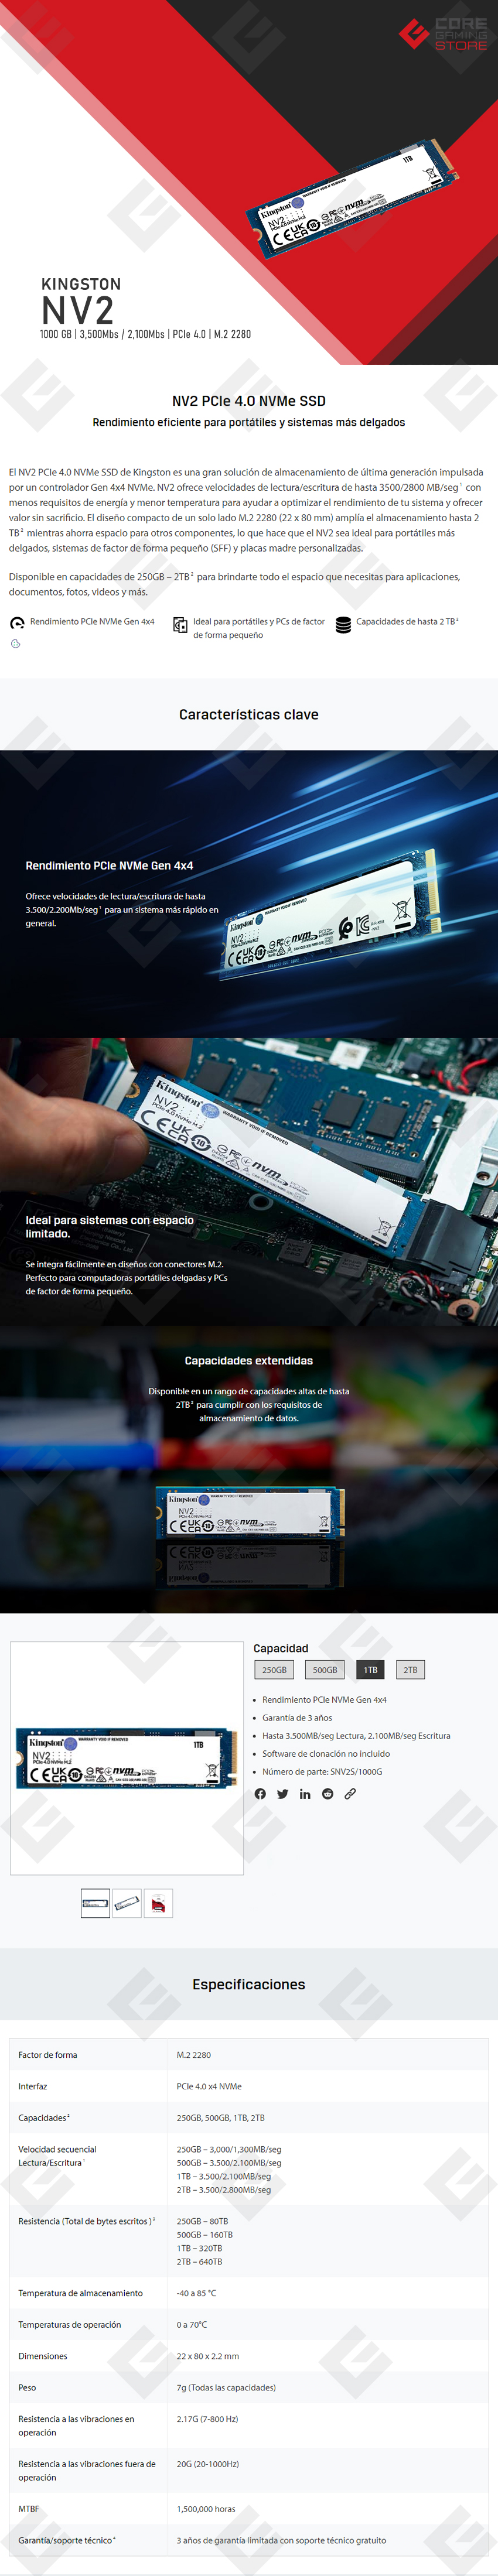 Unidad de Estado Solido SSD NVMe M.2 Kingston NV2 1000GB, 3500/2100 Mb/s, PCI Express 4.0 - SNV2S/1000G